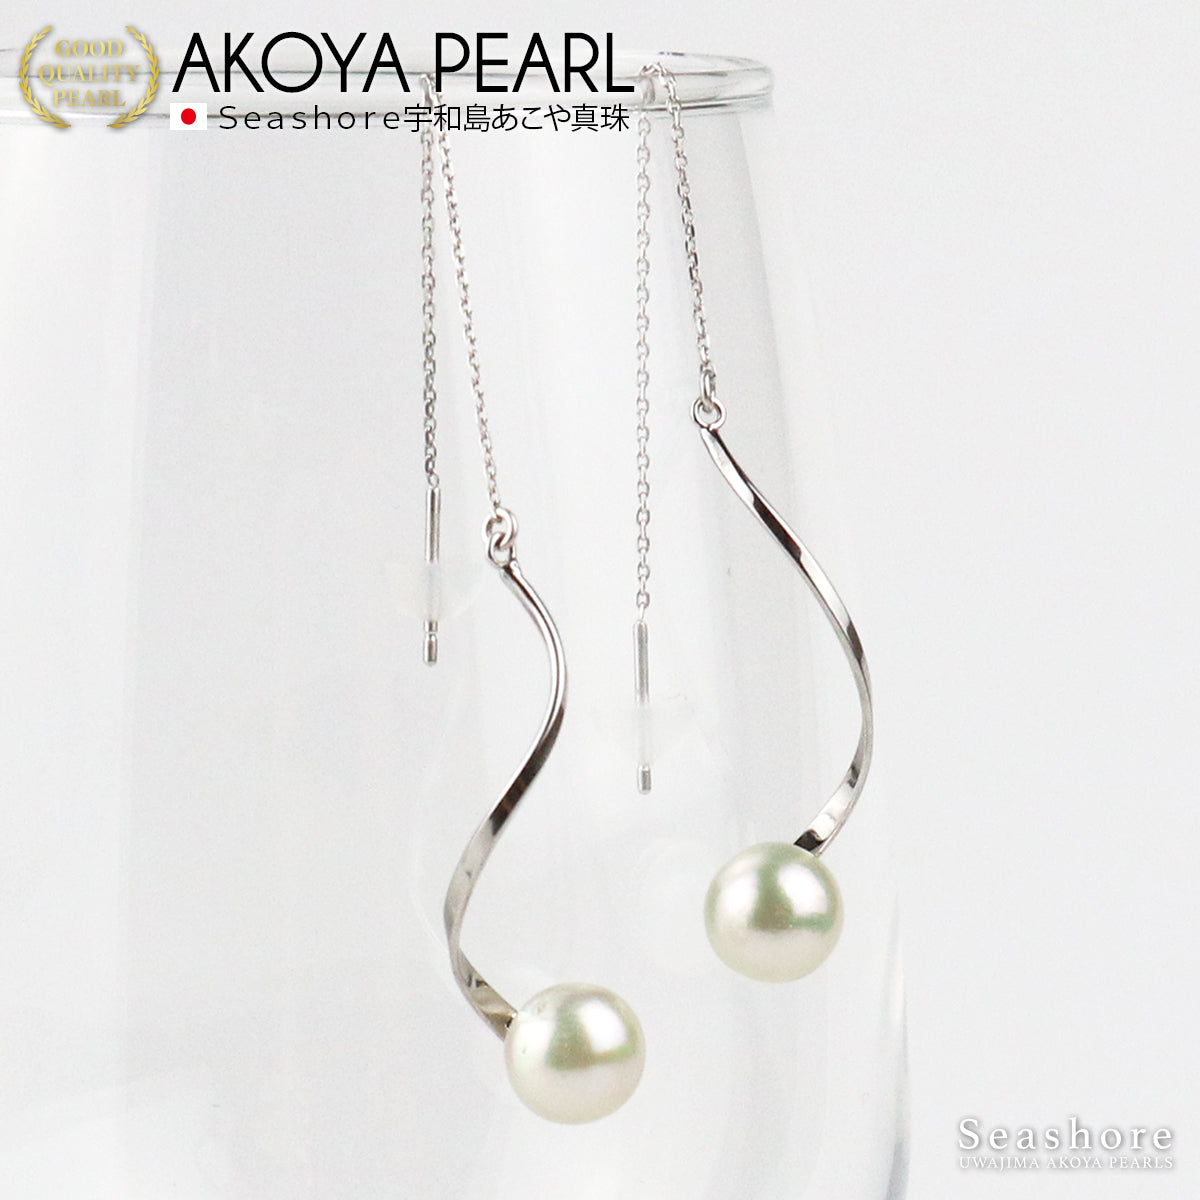 Akoya Pearl Earrings Single Dangle Akoya Twist American Earrings Women's Large Beads [8.0-8.5mm] Natural White Untoned Color SV925